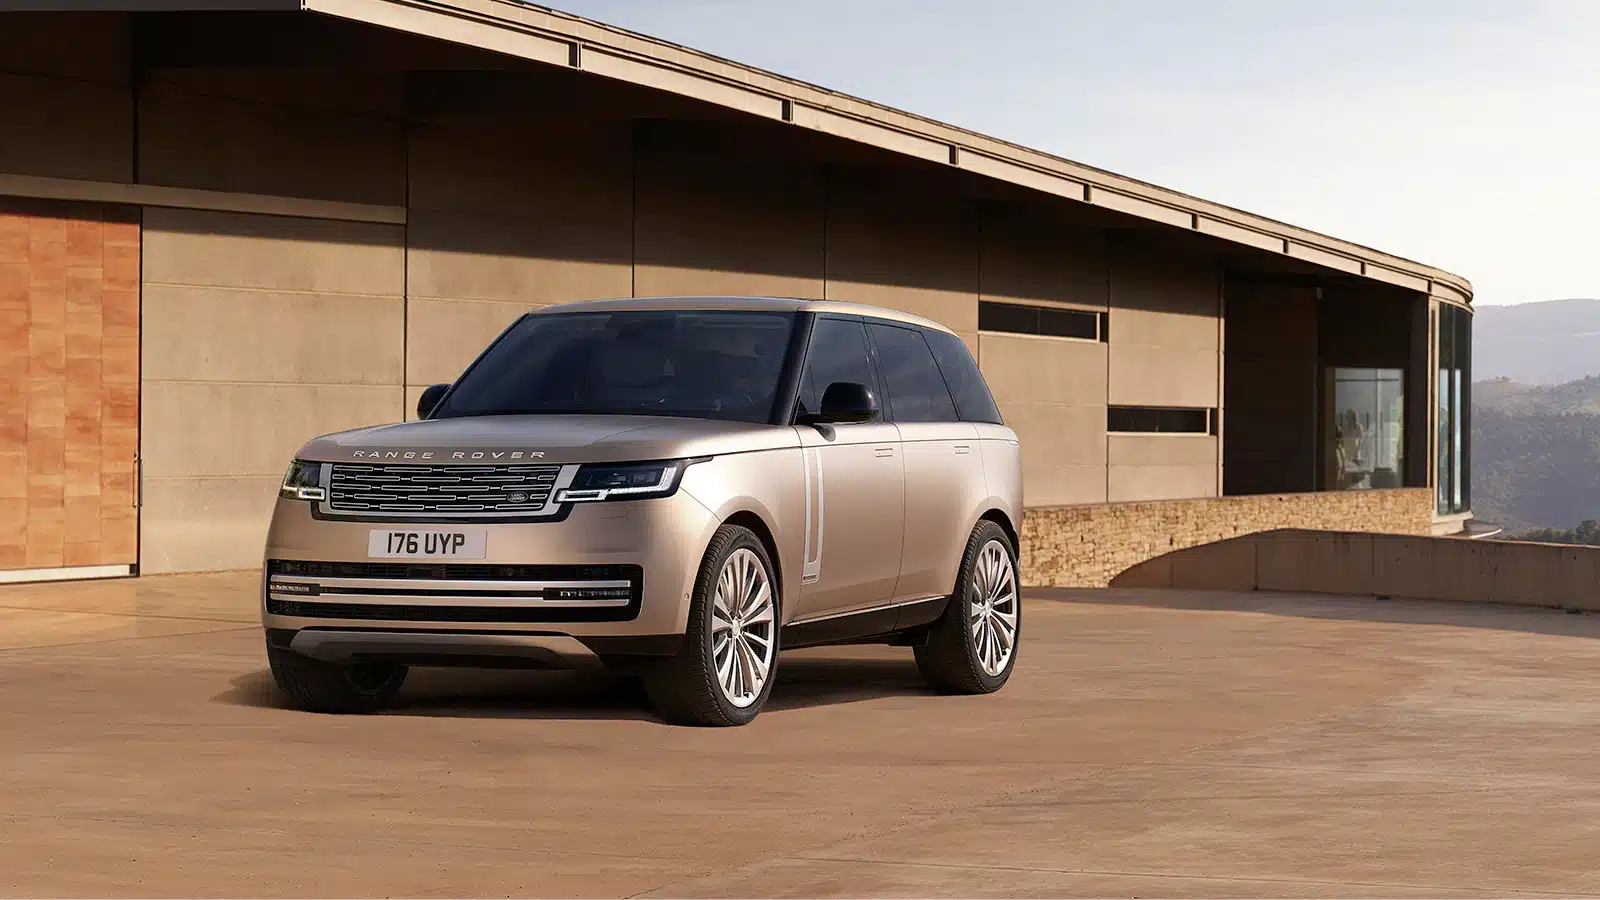 Do the New Range Rover's Luxury SUVs Outperform Tesla?